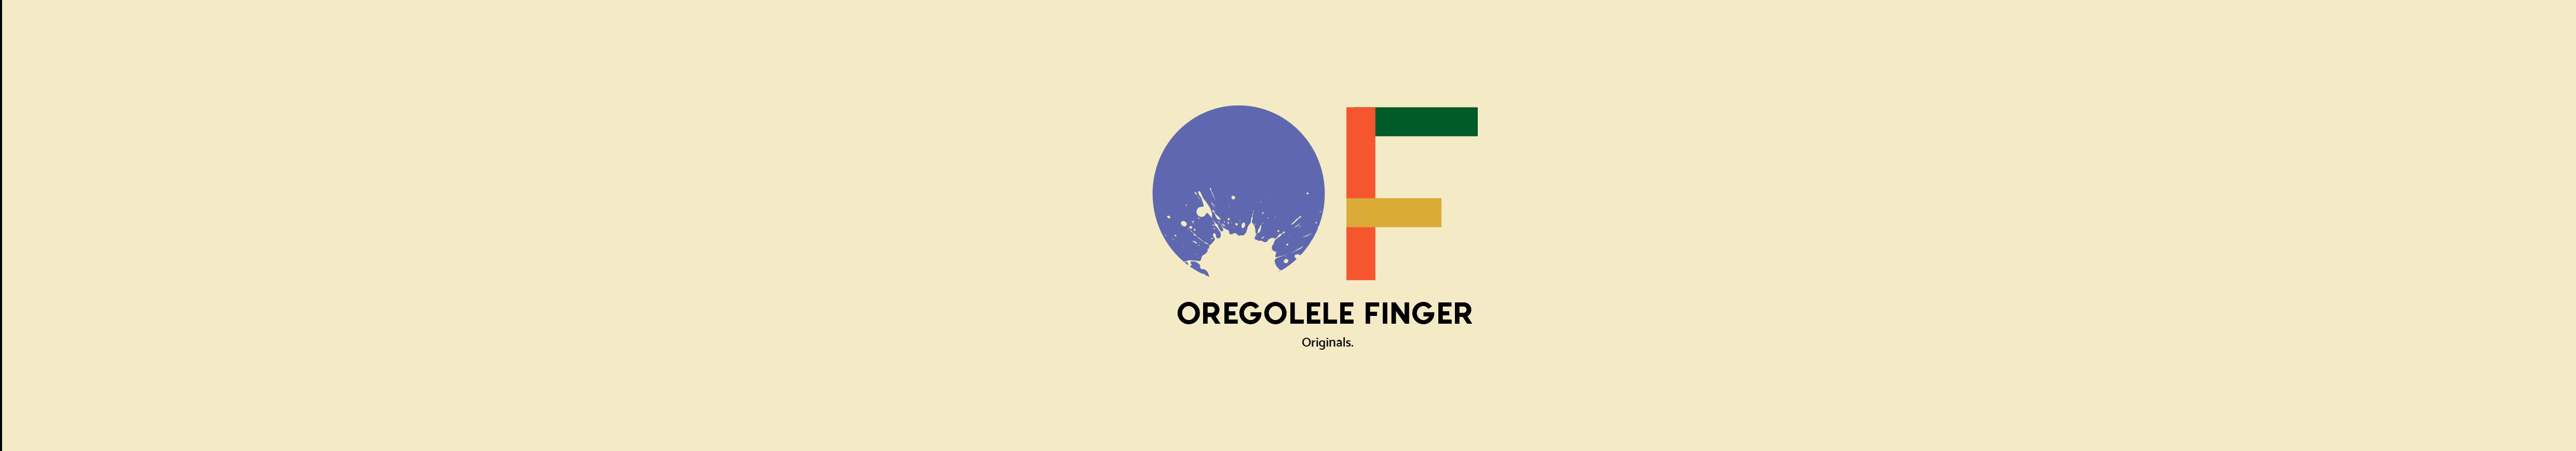 Profielbanner van Oregolelele Finger